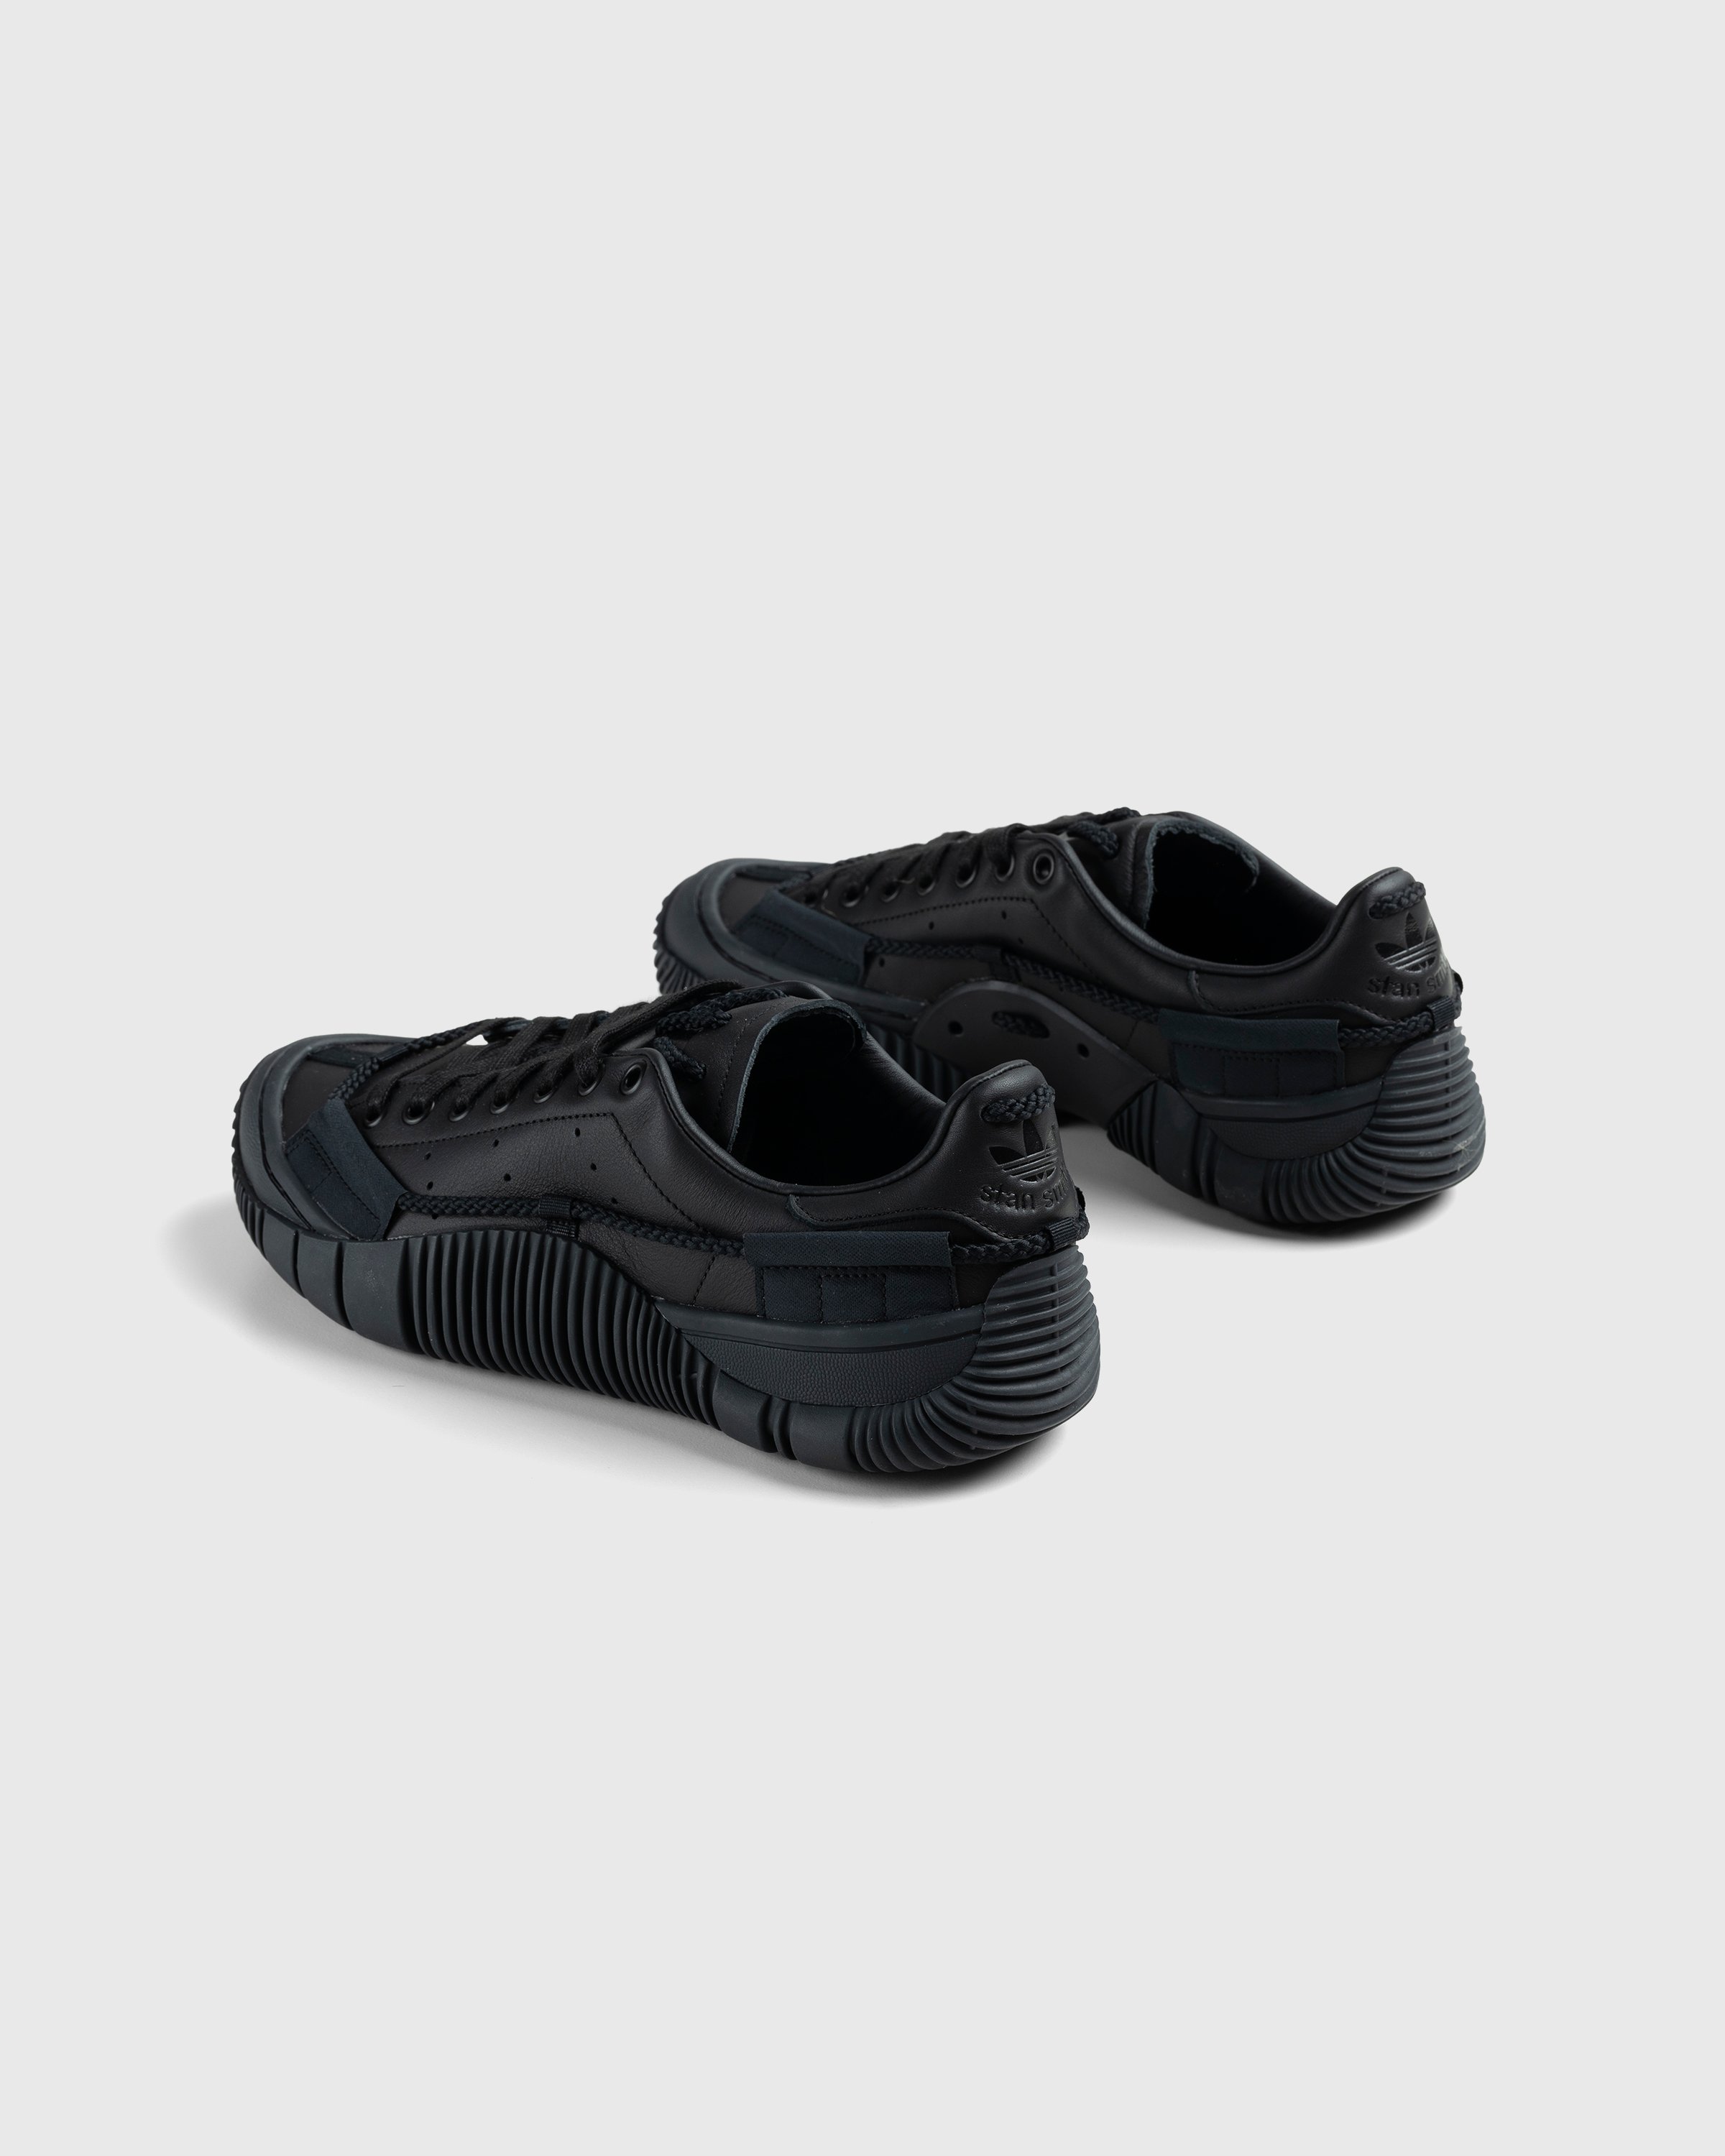 Adidas x Craig Green - Scuba Stan Black - Footwear - Black - Image 4